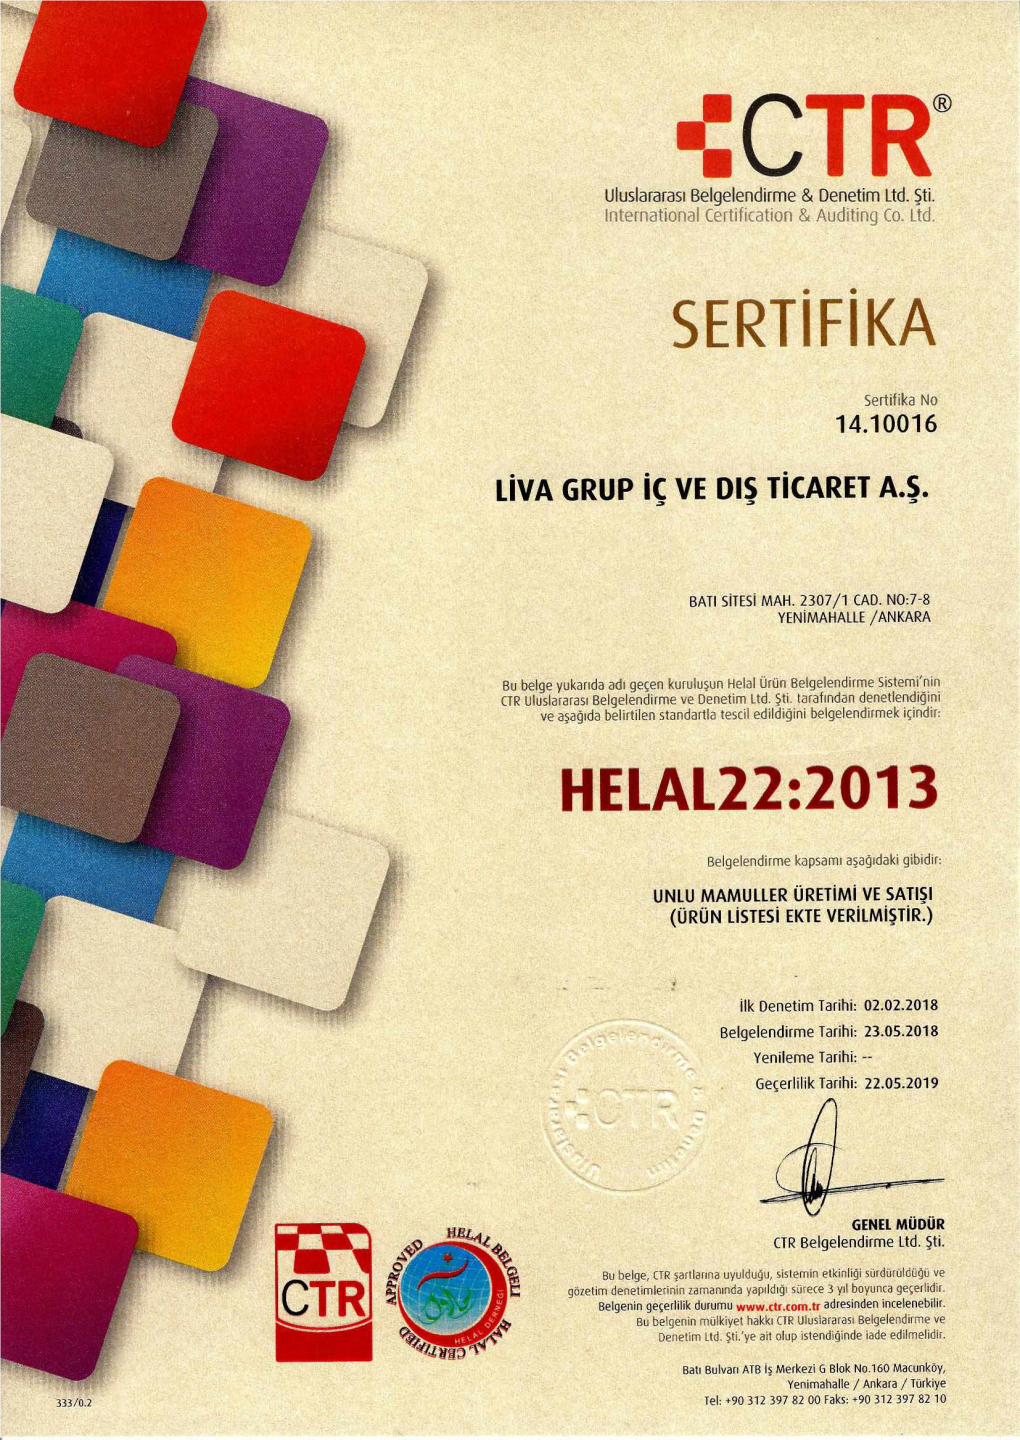 Sertifika Helal22:2013